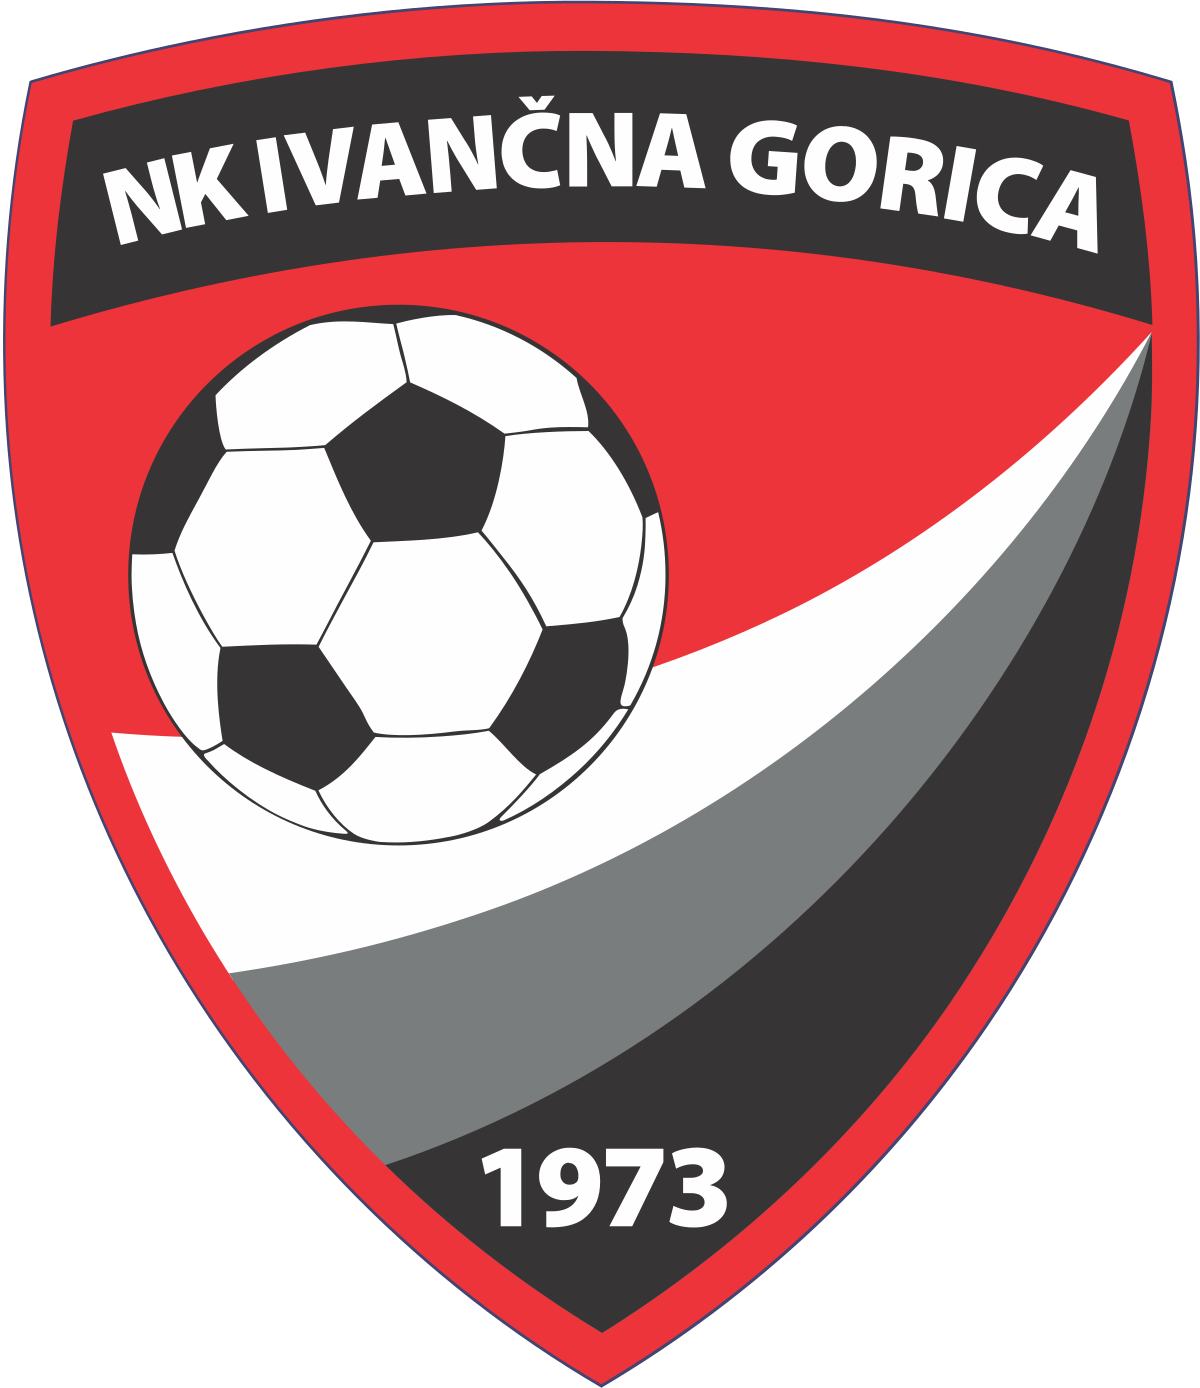 Ivancna Gorica logo